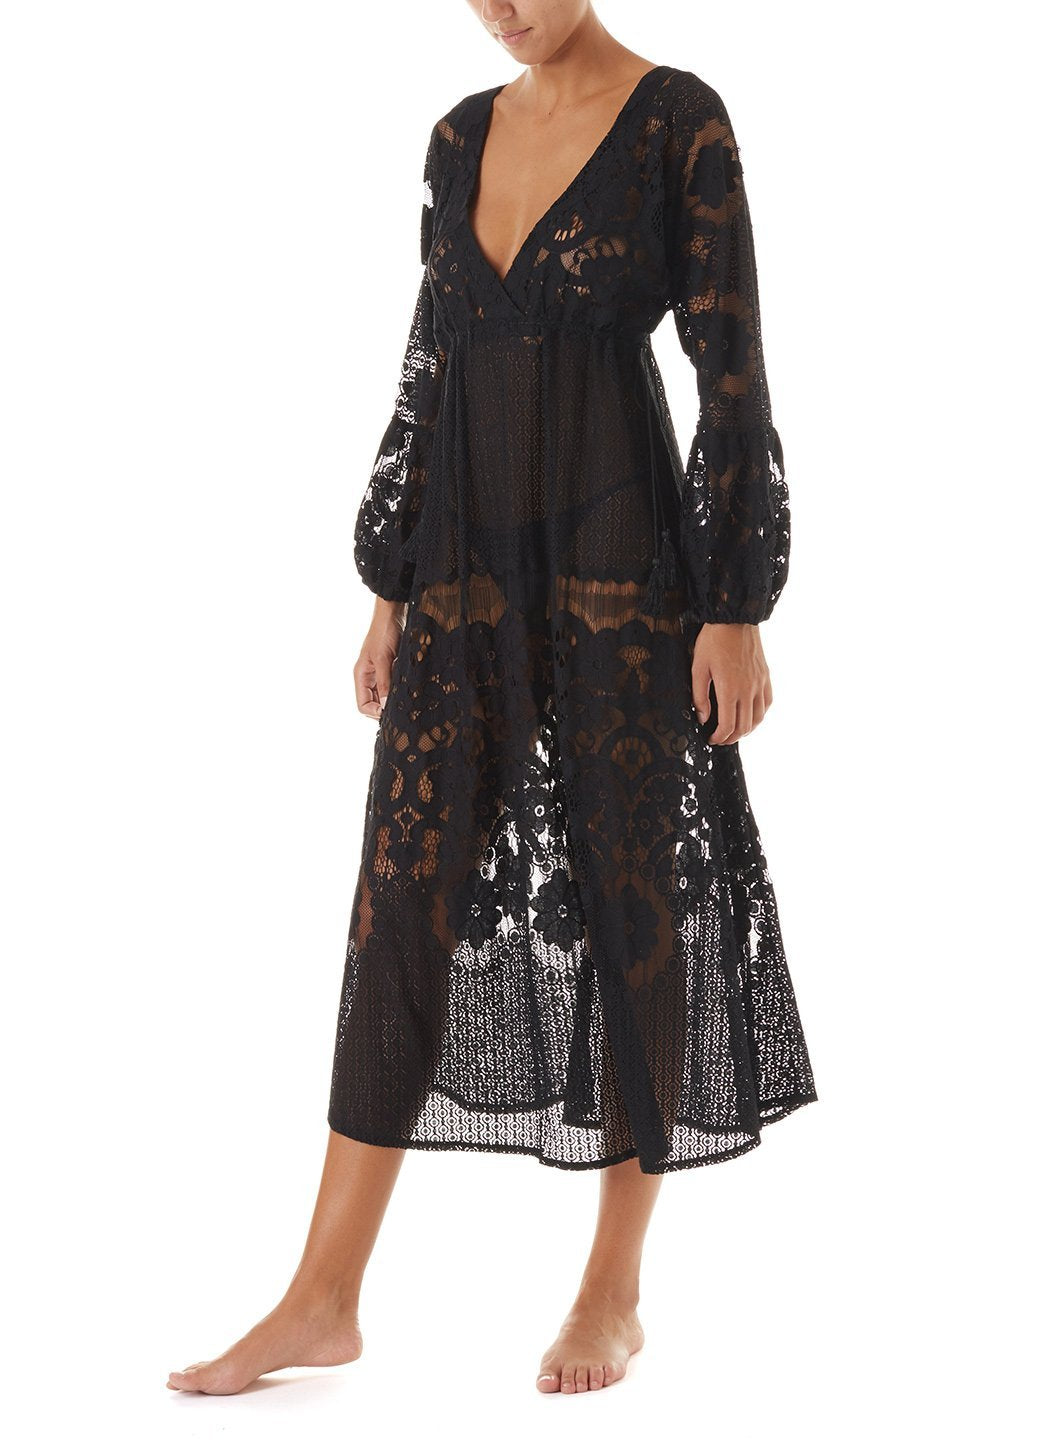 melissa black lace tieside midi dress 2019 F